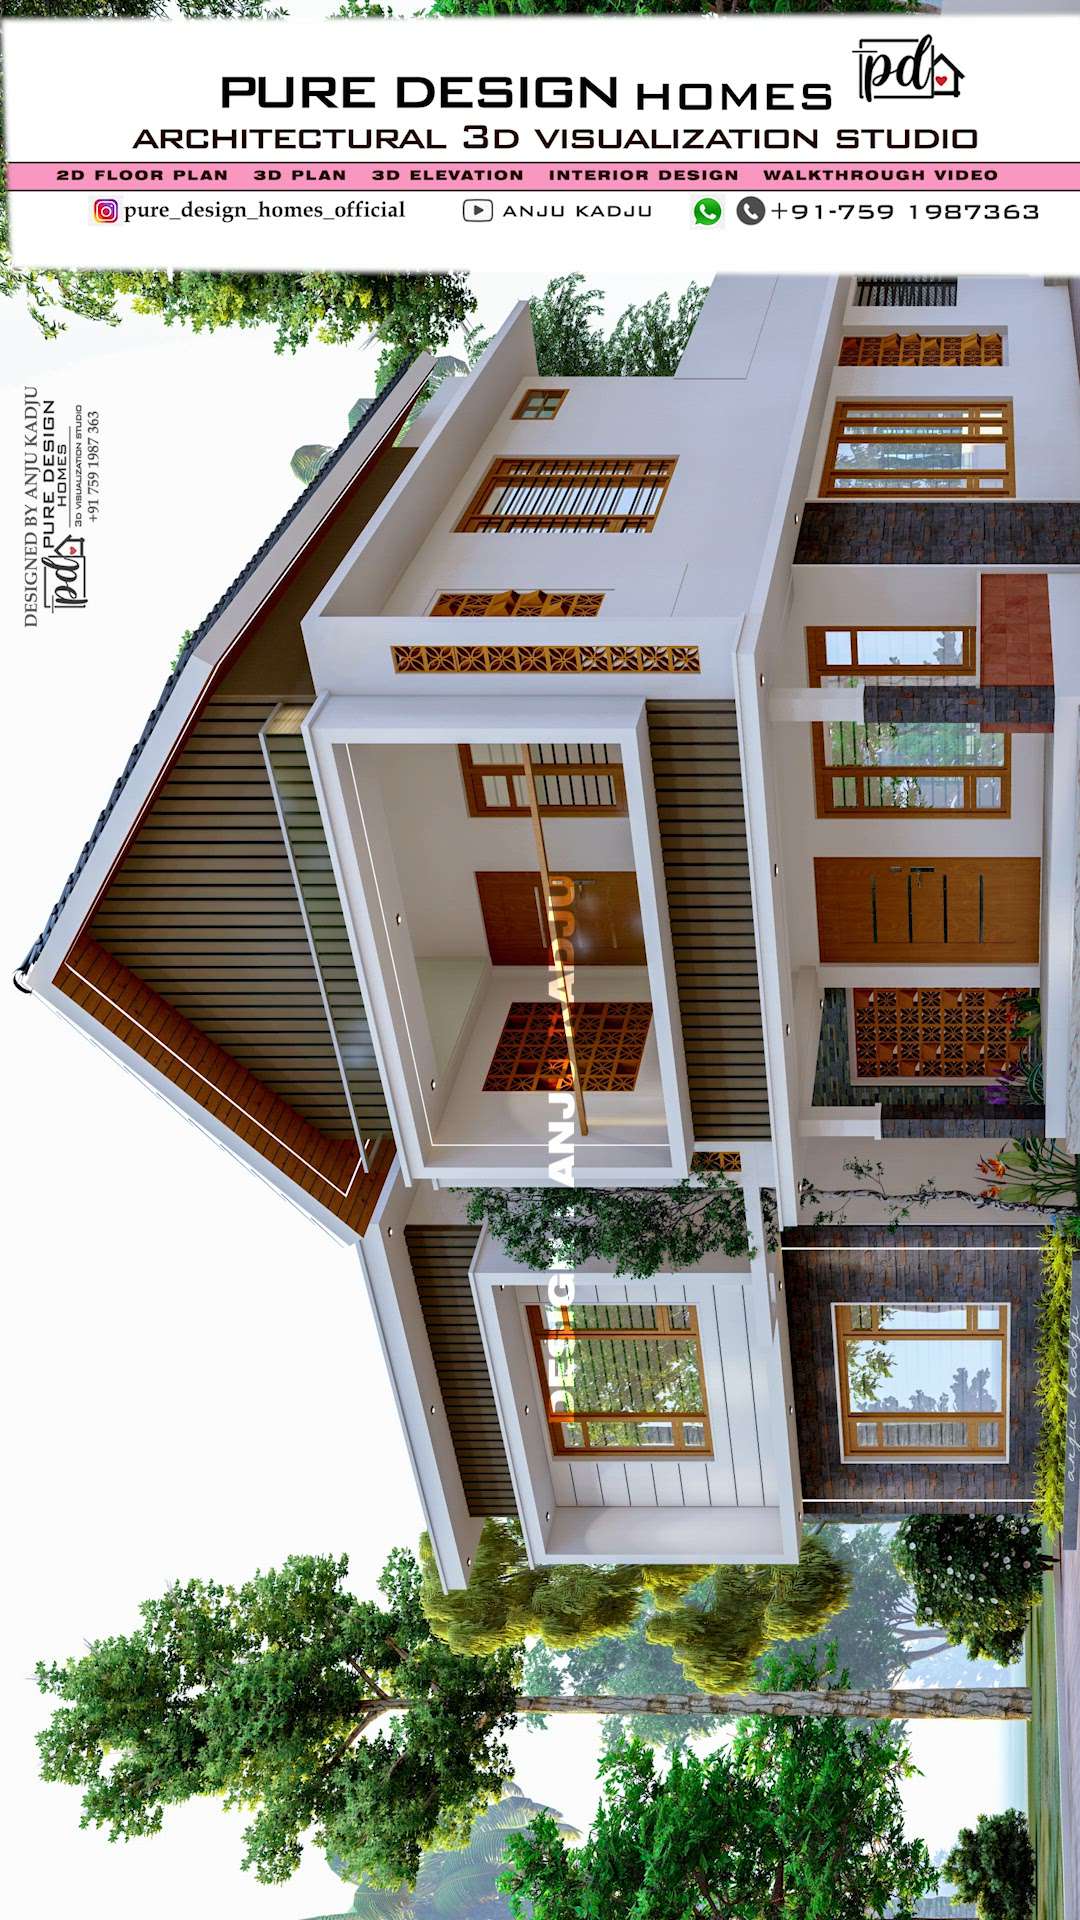 Beautiful house elevation with interior design
Contemporary house design
3d floor plan / interior design concept 
Designed by anju kadju
+917591987363
3d floor plan / interior top view / 3d plan
നിങ്ങളുടെ വീടും ഇതുപോലെ ദൃശ്യവത്കരിച്ചു ലഭിക്കാൻ ഞങ്ങളുമായി ബന്ധപെടു.
Anju kadju
+917591987363 (WhatsApp only🙏🏻)
Architectural 3d designer
#contemporary
#housedesign #kerala #3dfloorplan #interiortopview #interiordesigner #3dplan #online3ddesigner #anjukadju